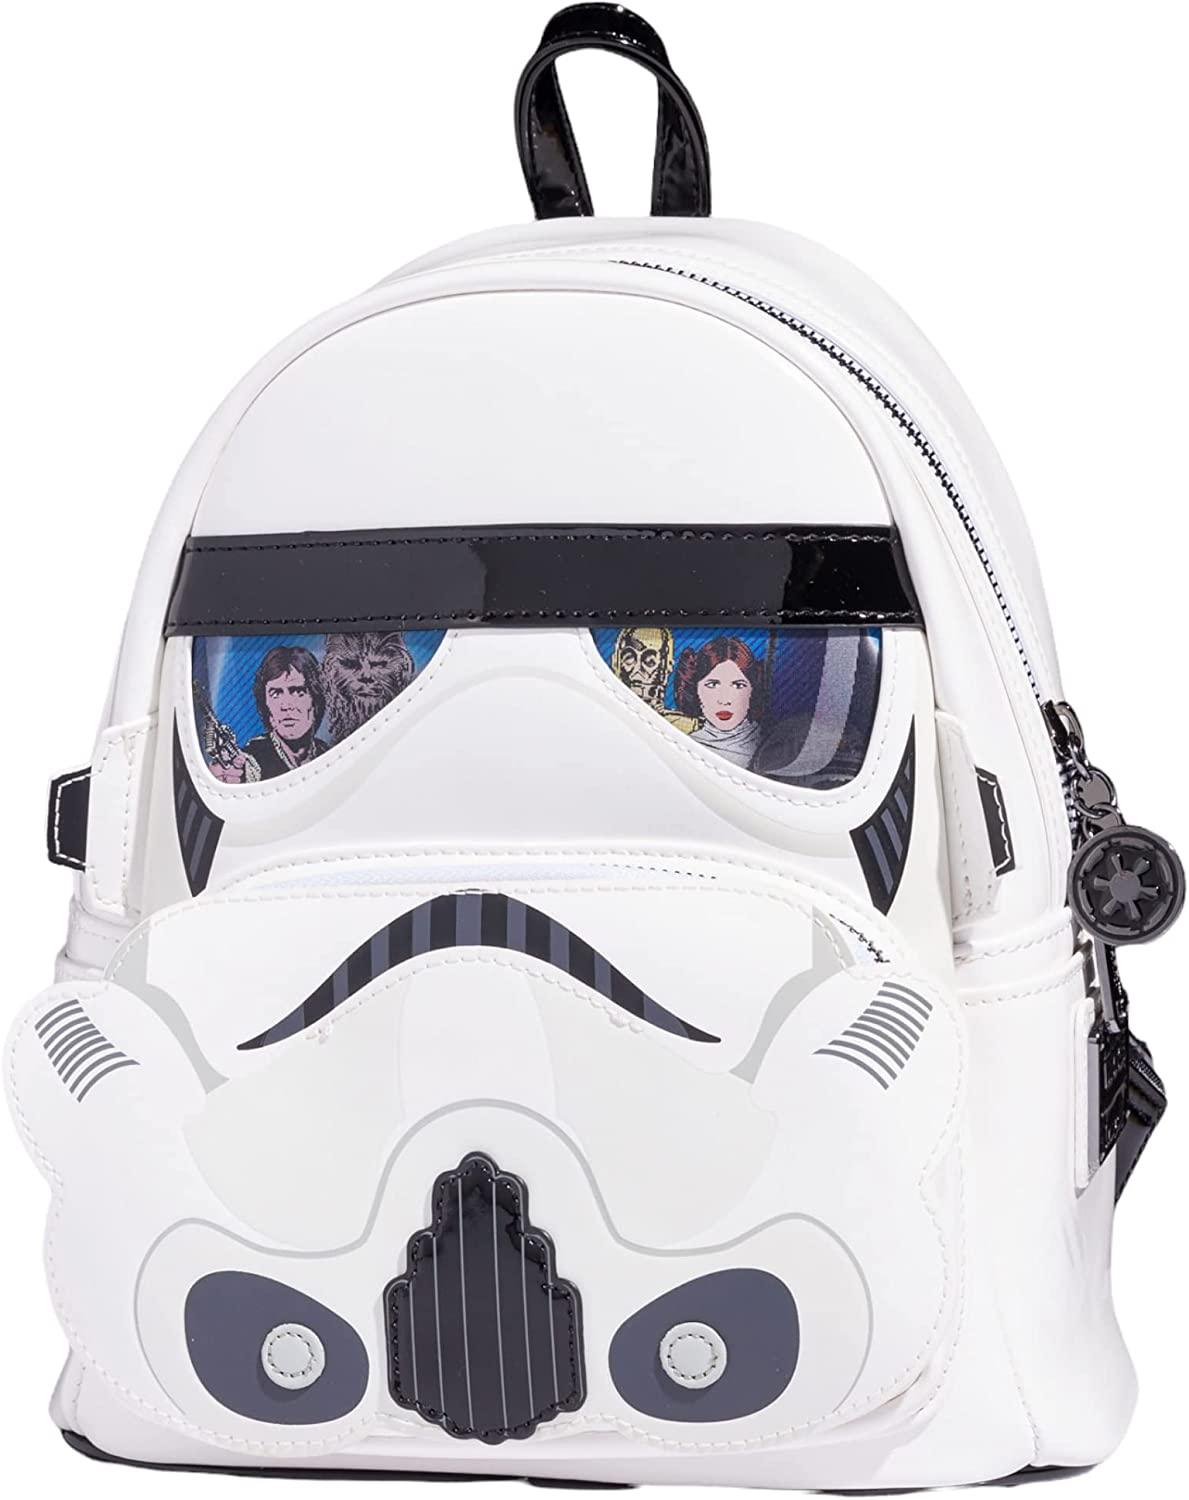 Stormtrooper Lenticular Cosplay Mini Backpack